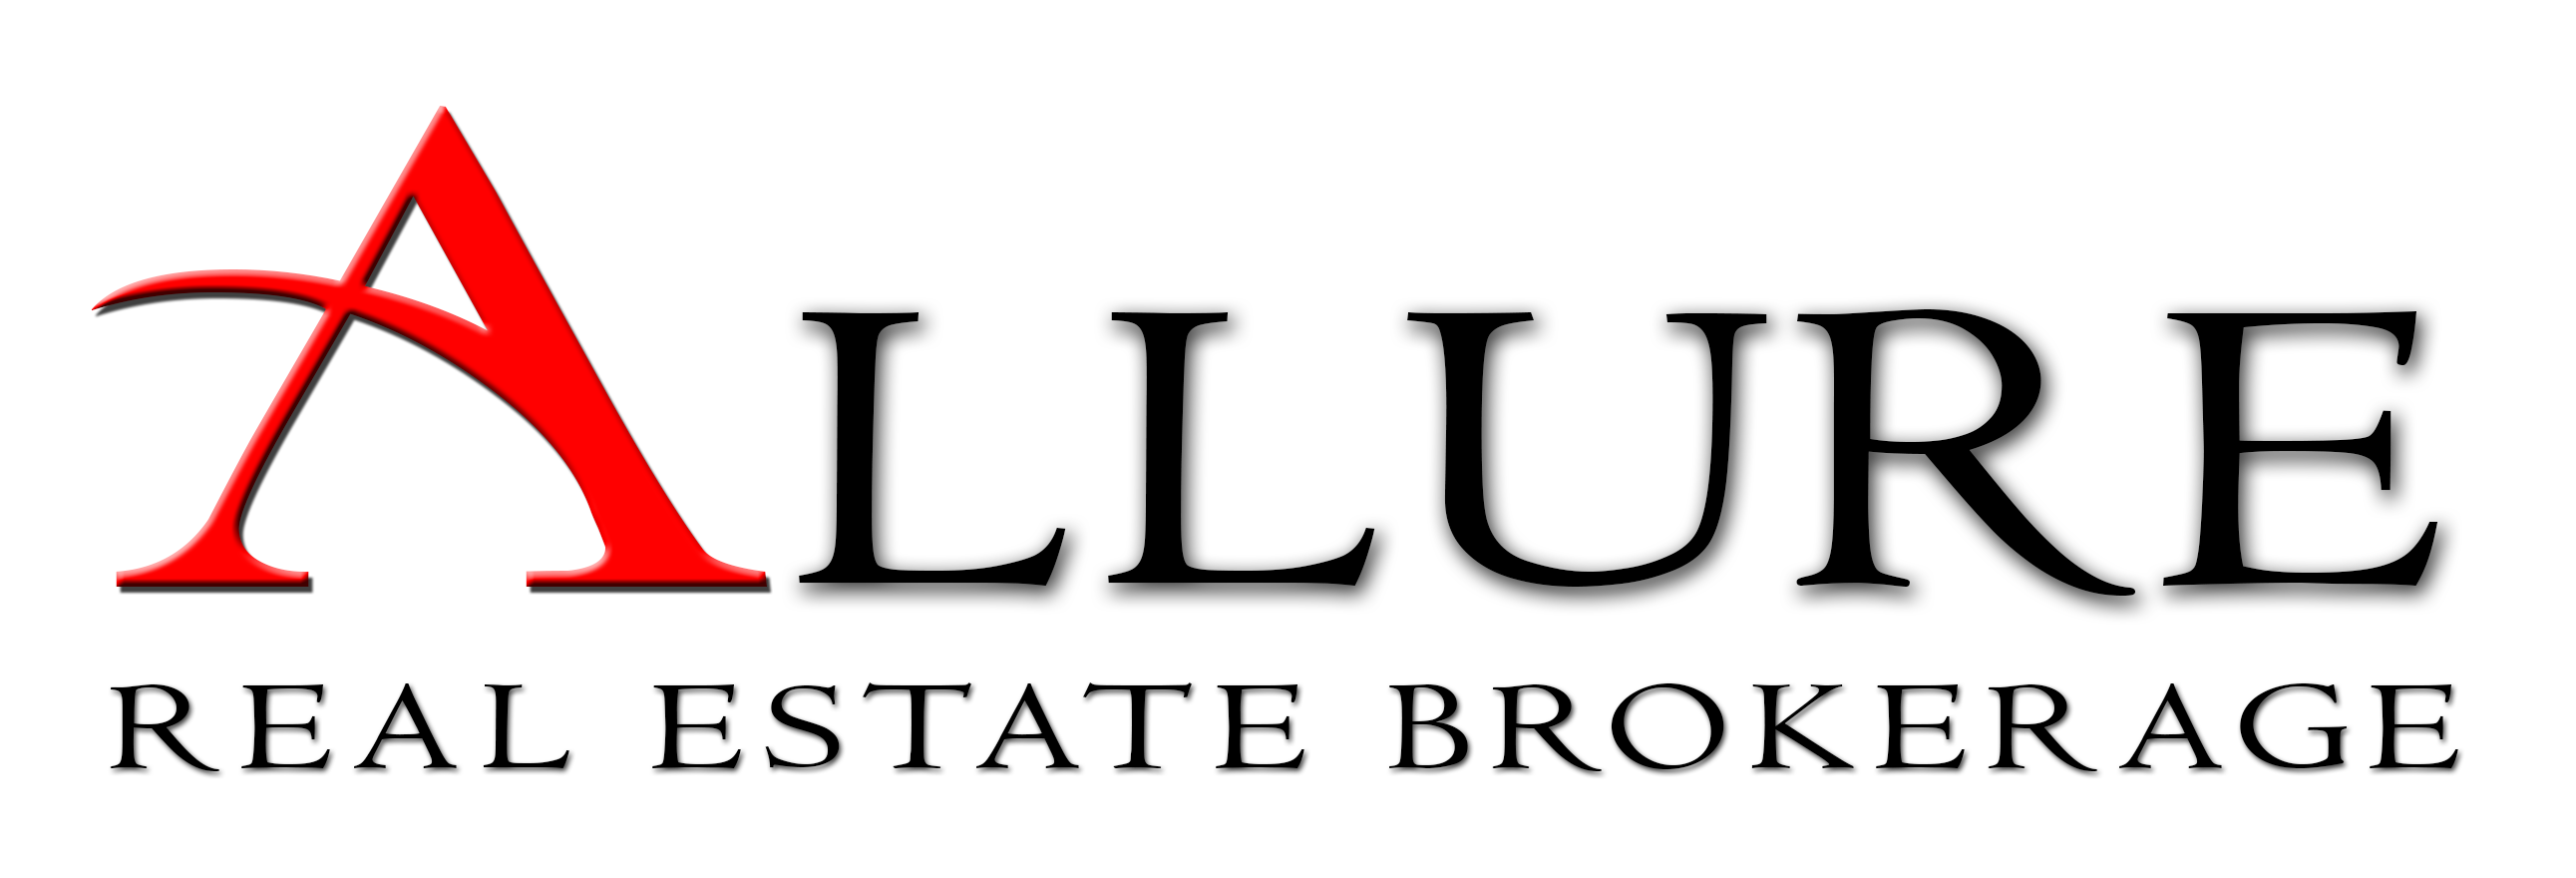 Allure Real Estate Brokerage logo